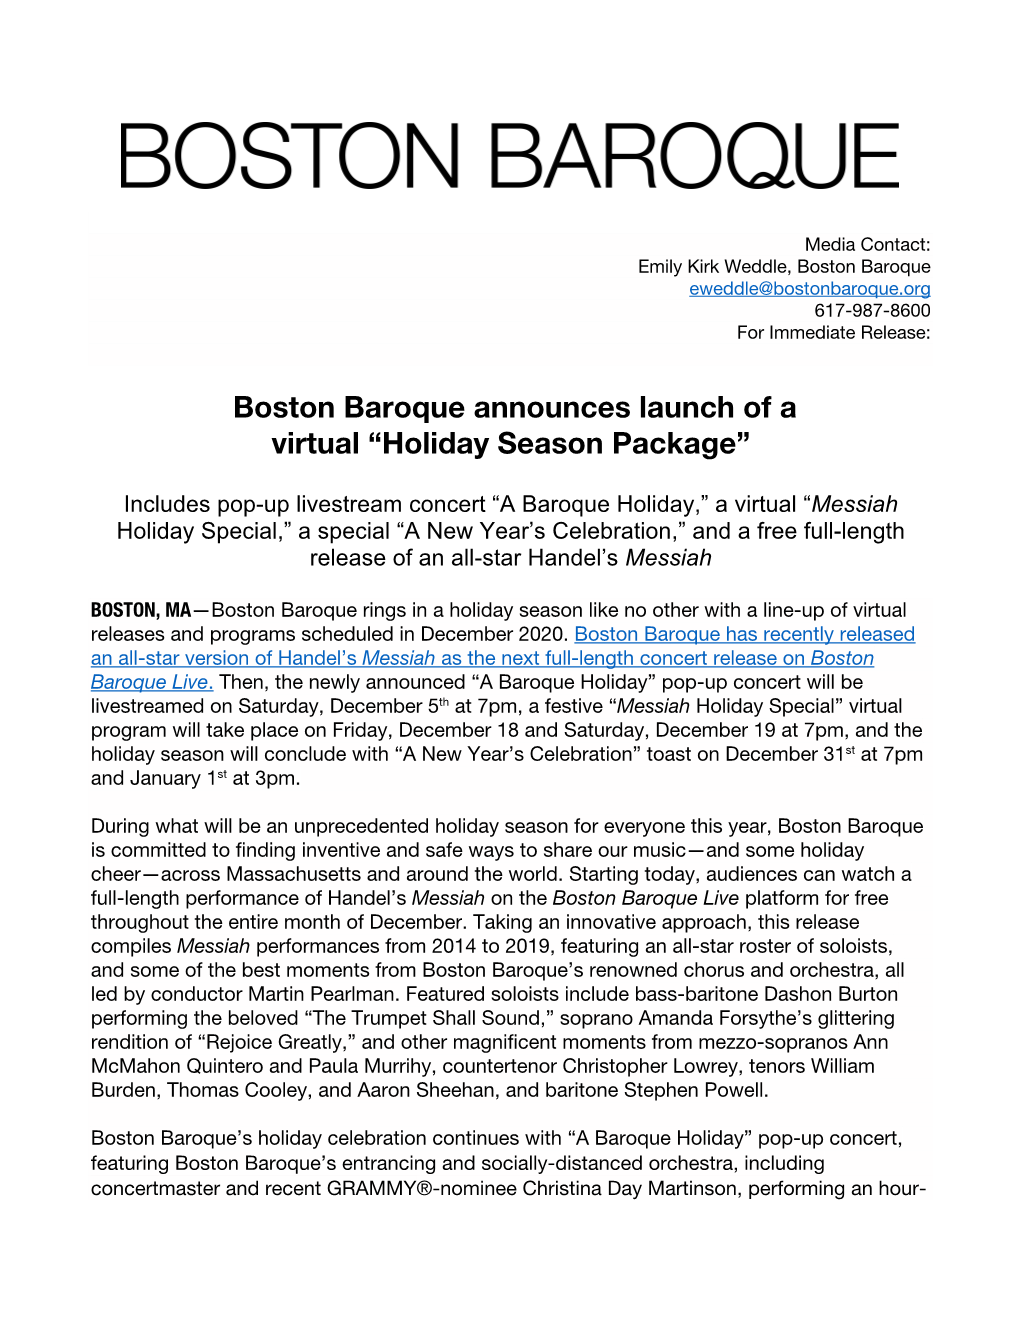 Boston Baroque Announces Launch of a Virtual “Holiday Season Package”